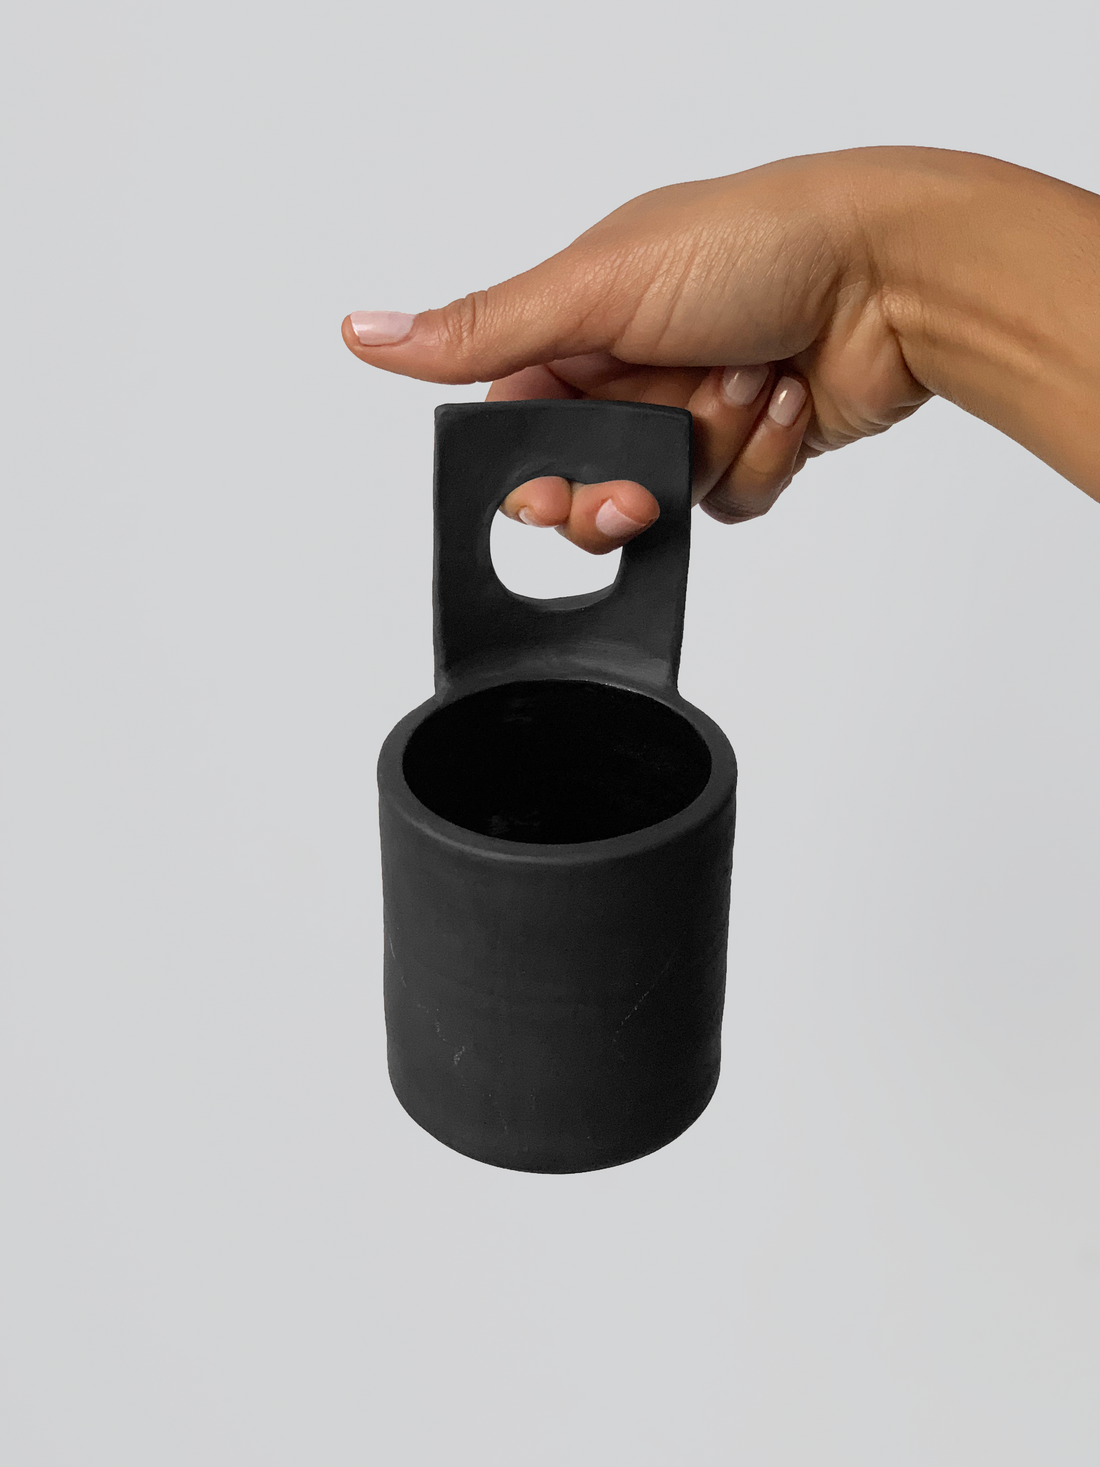 Black matte stoneware ceramic mug with upwards facing flat square circle center as the handle.